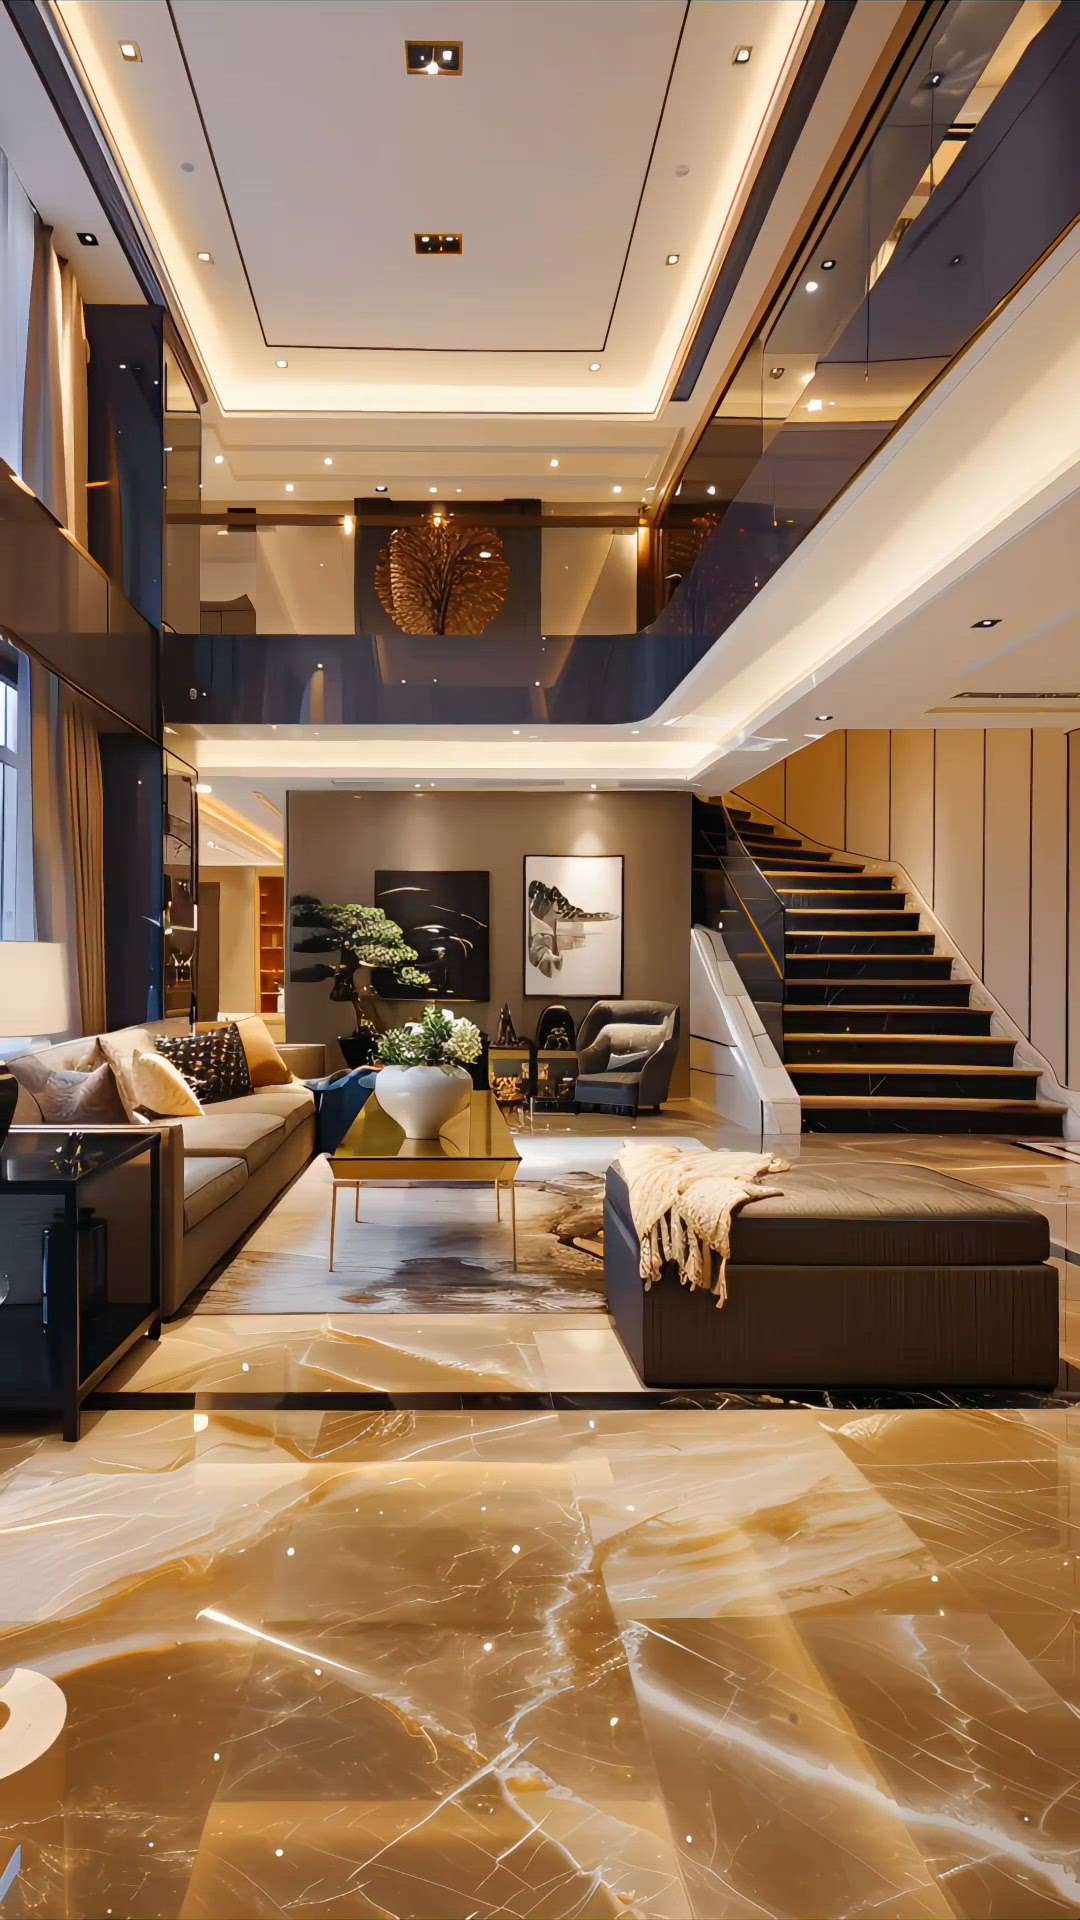 #wooden #intiriorroom #InteriorDesigner #luxury. #godofdesign #modular. #home